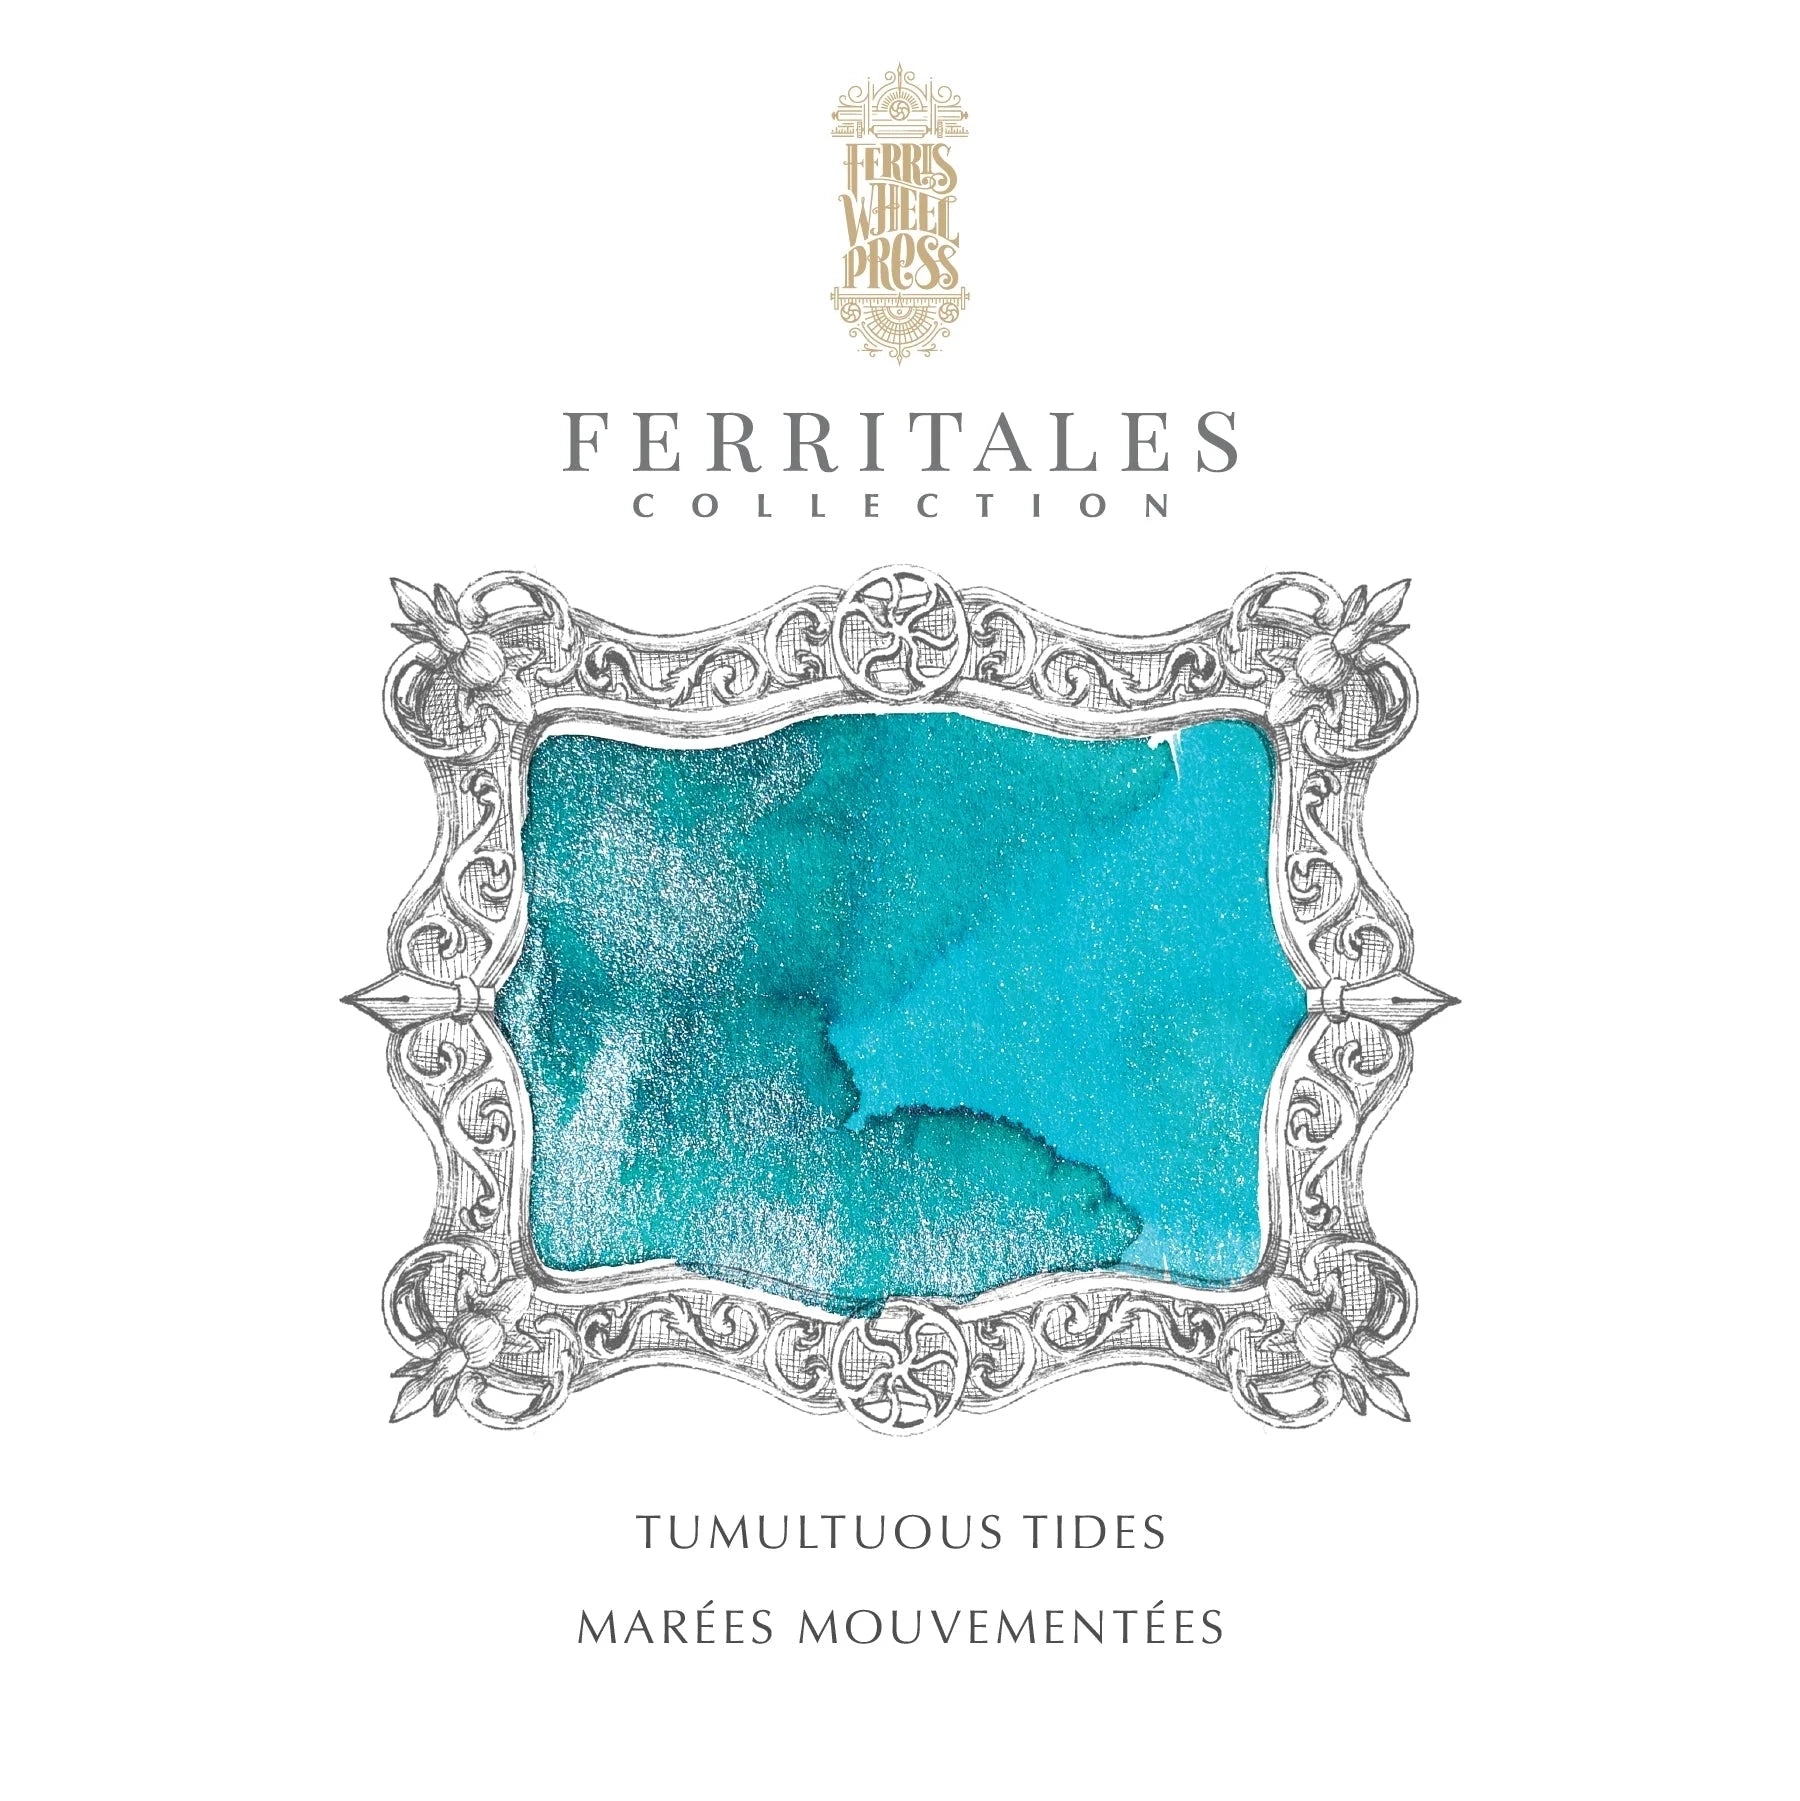 FerriTales™ Ferris Wheel Press | Once Upon A Time | Tumultuous Tides 20ml